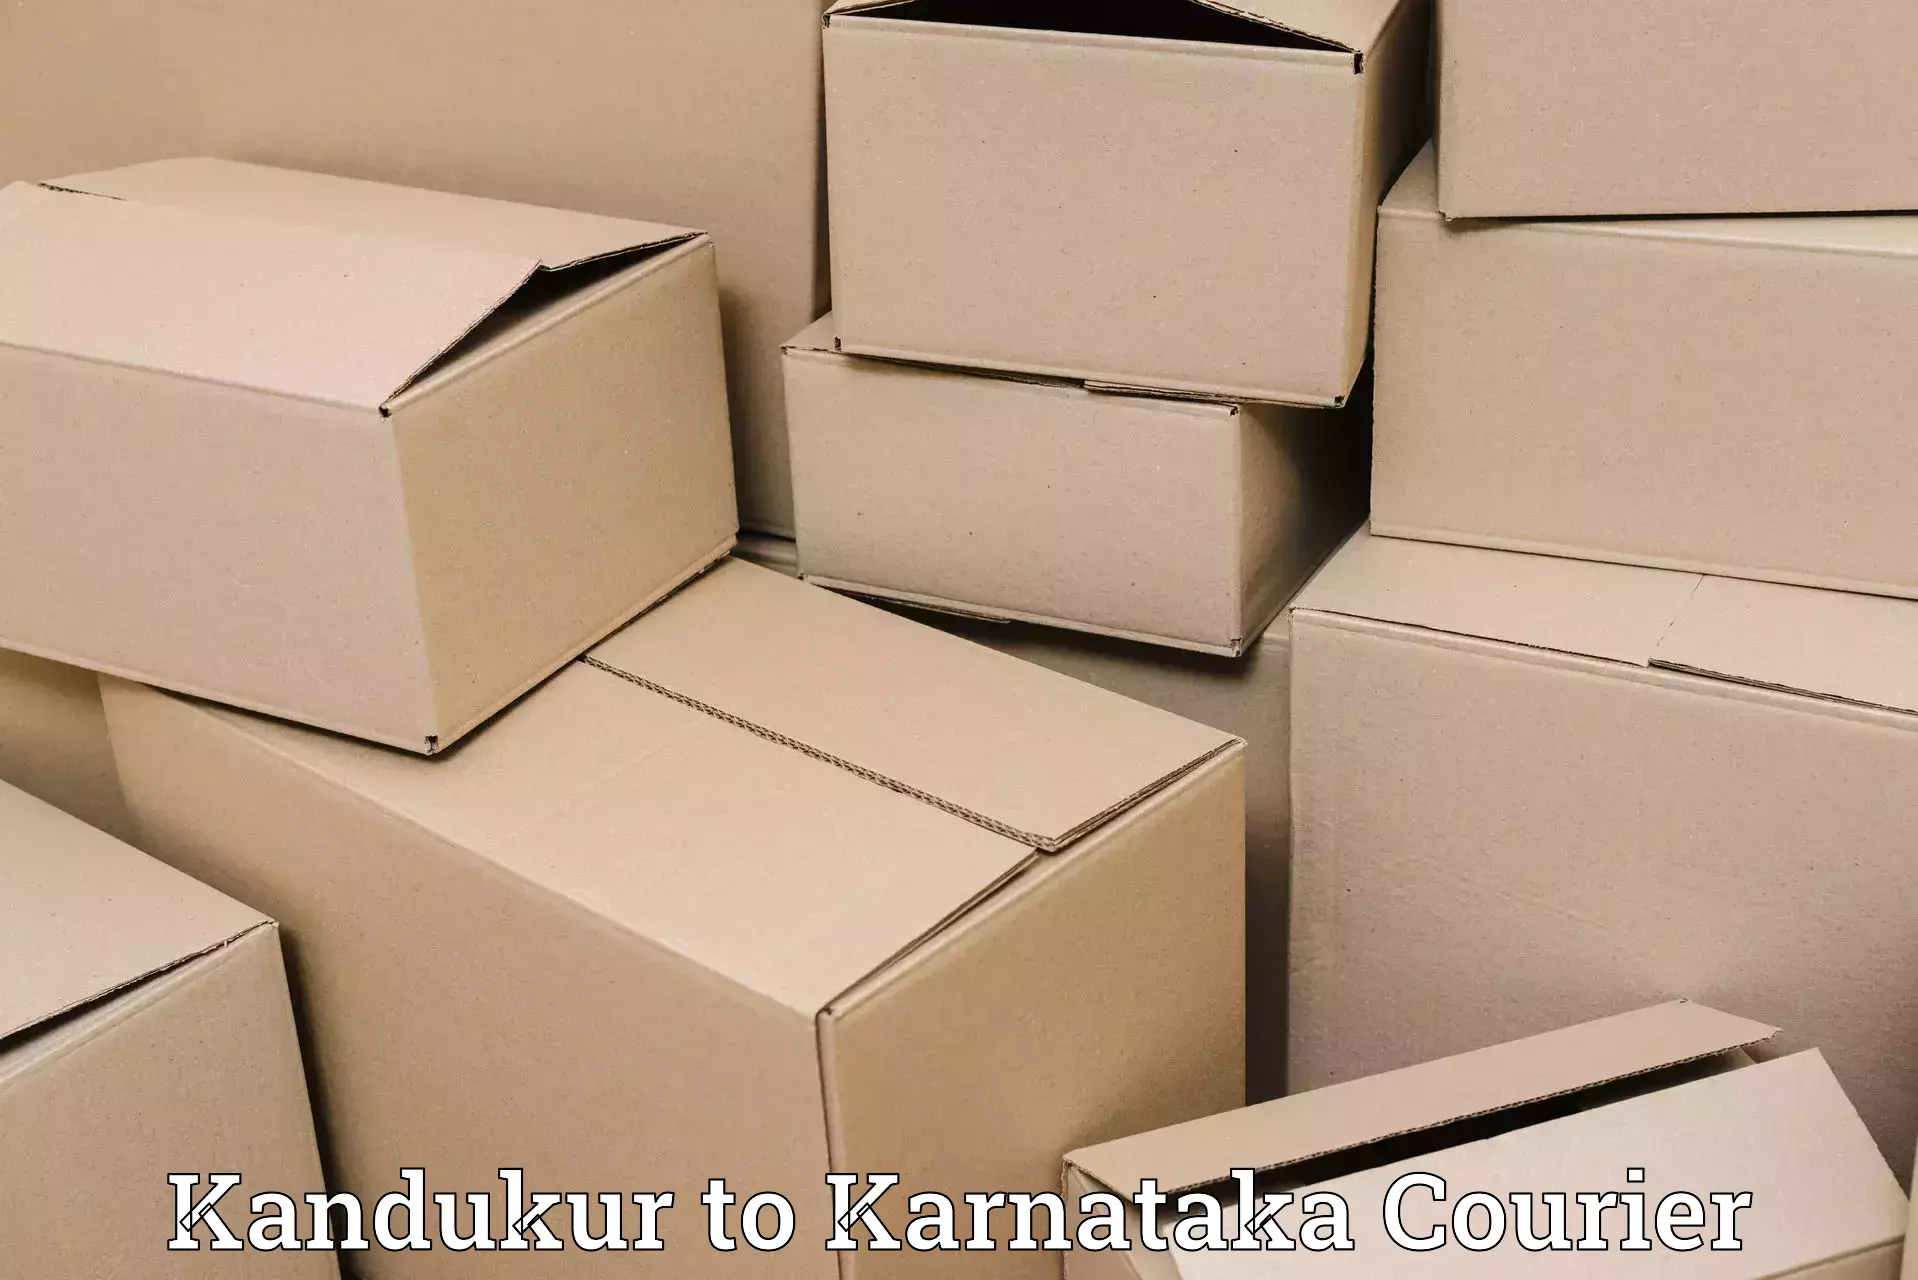 Flexible delivery schedules Kandukur to Byndoor